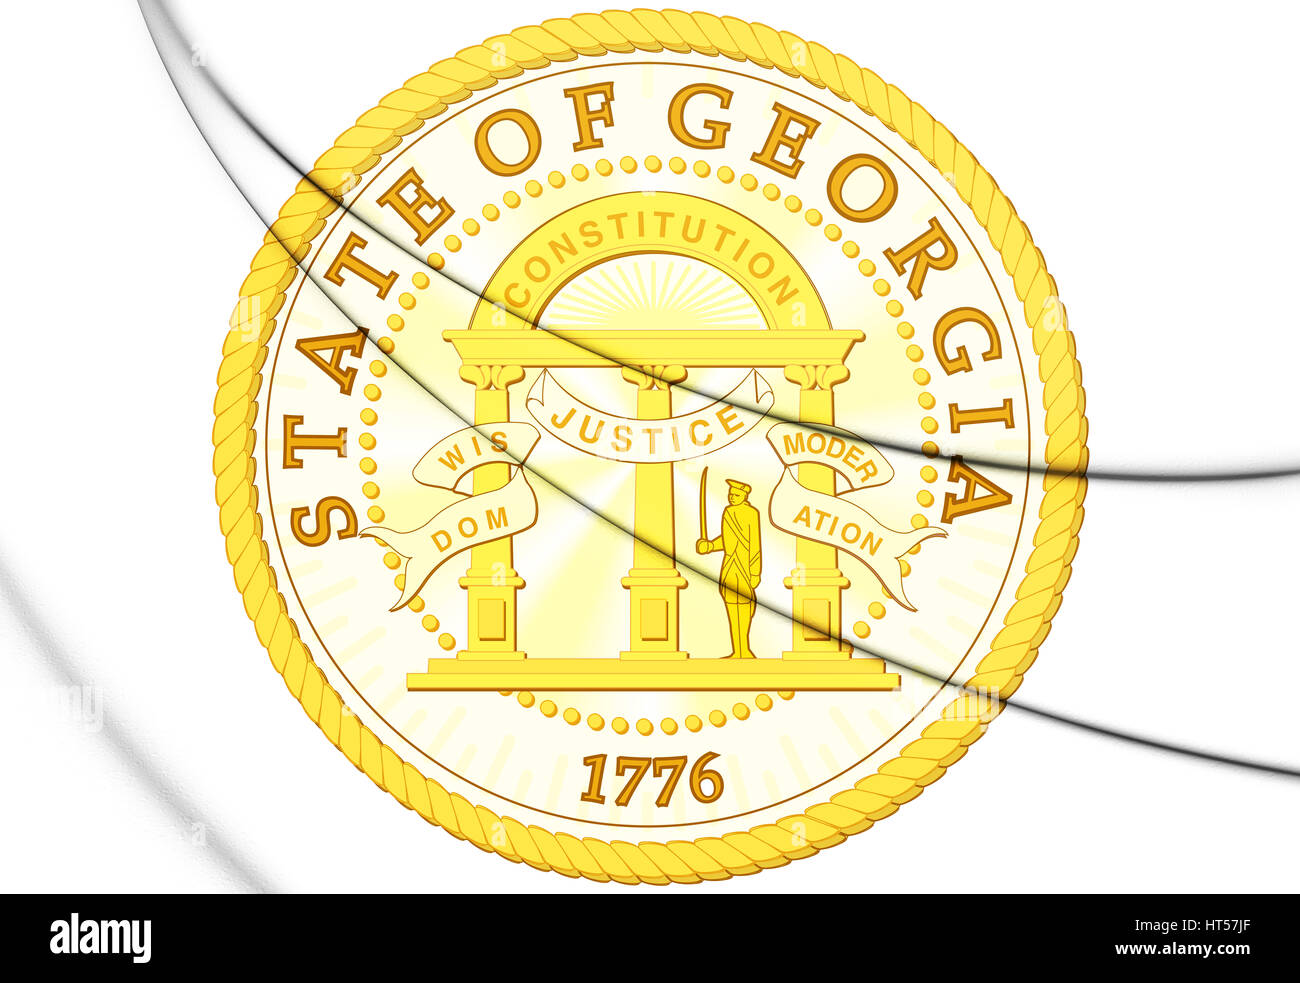 State Seal of Georgia, USA. 3D Illustration. Stock Photo